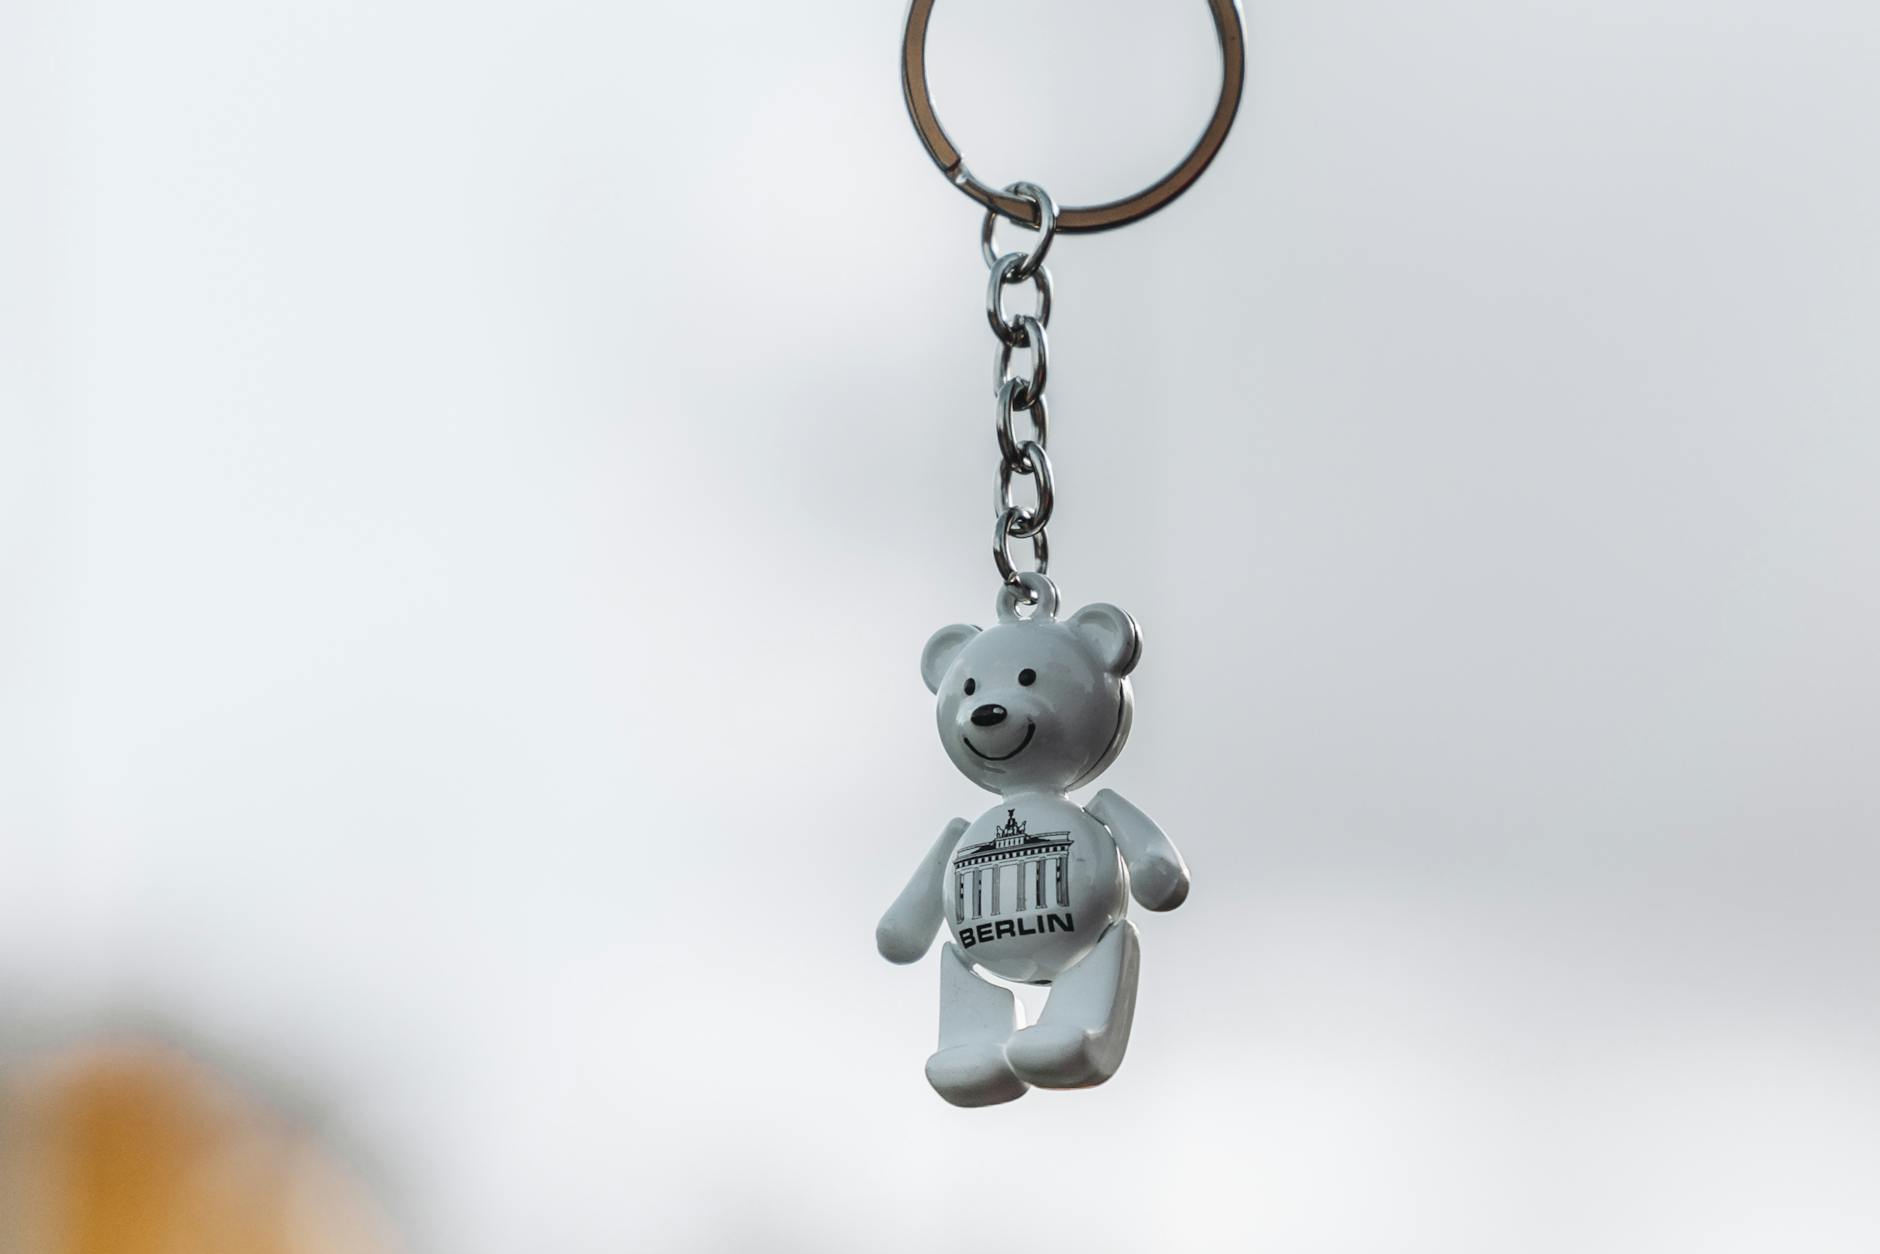 A keychain with a teddy bear on it